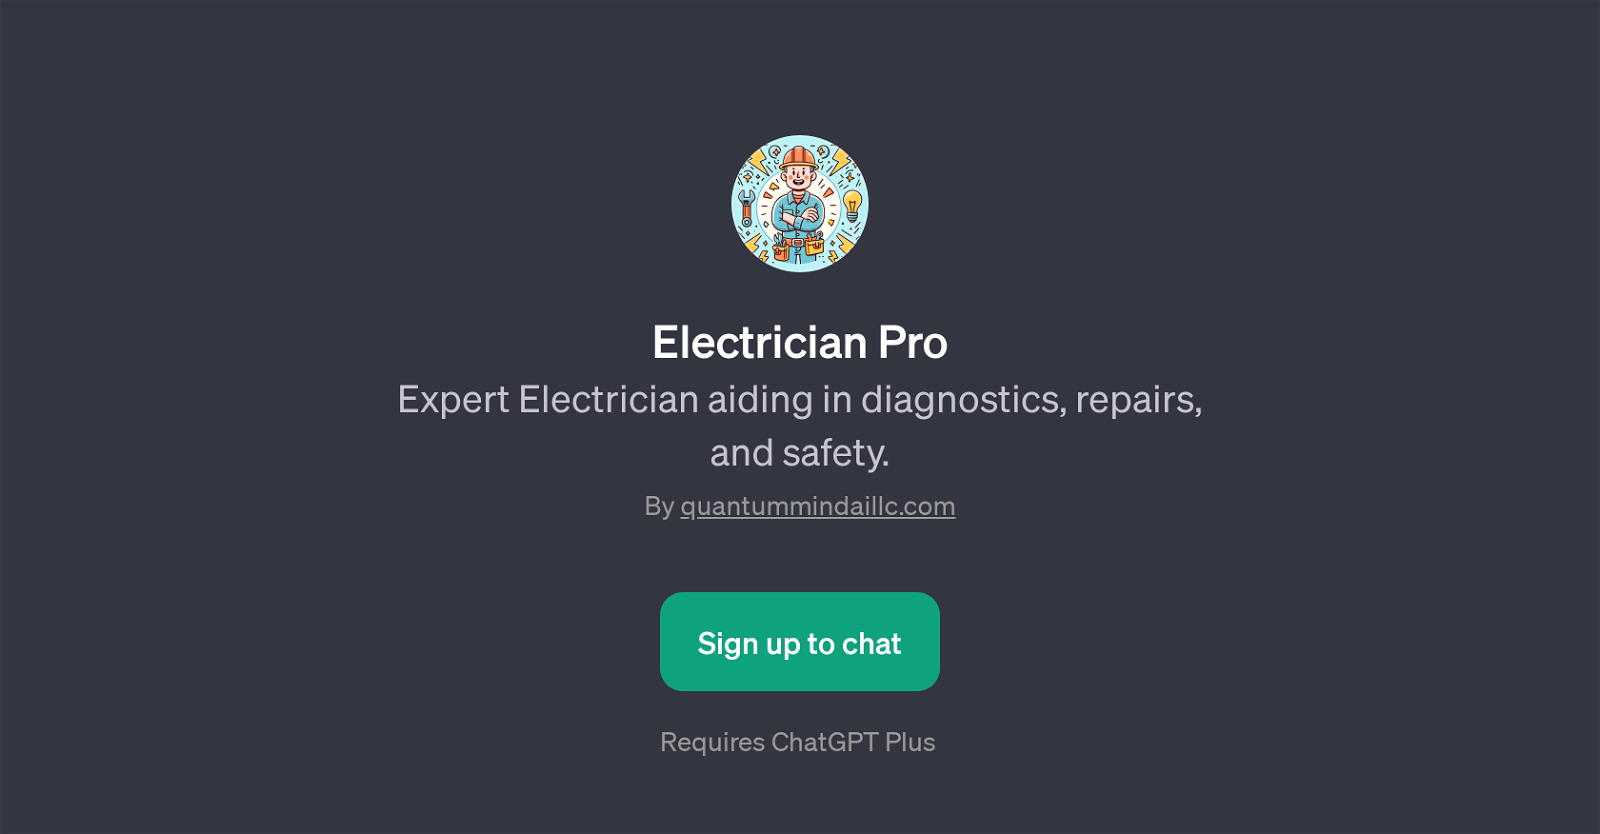 Electrician Pro website